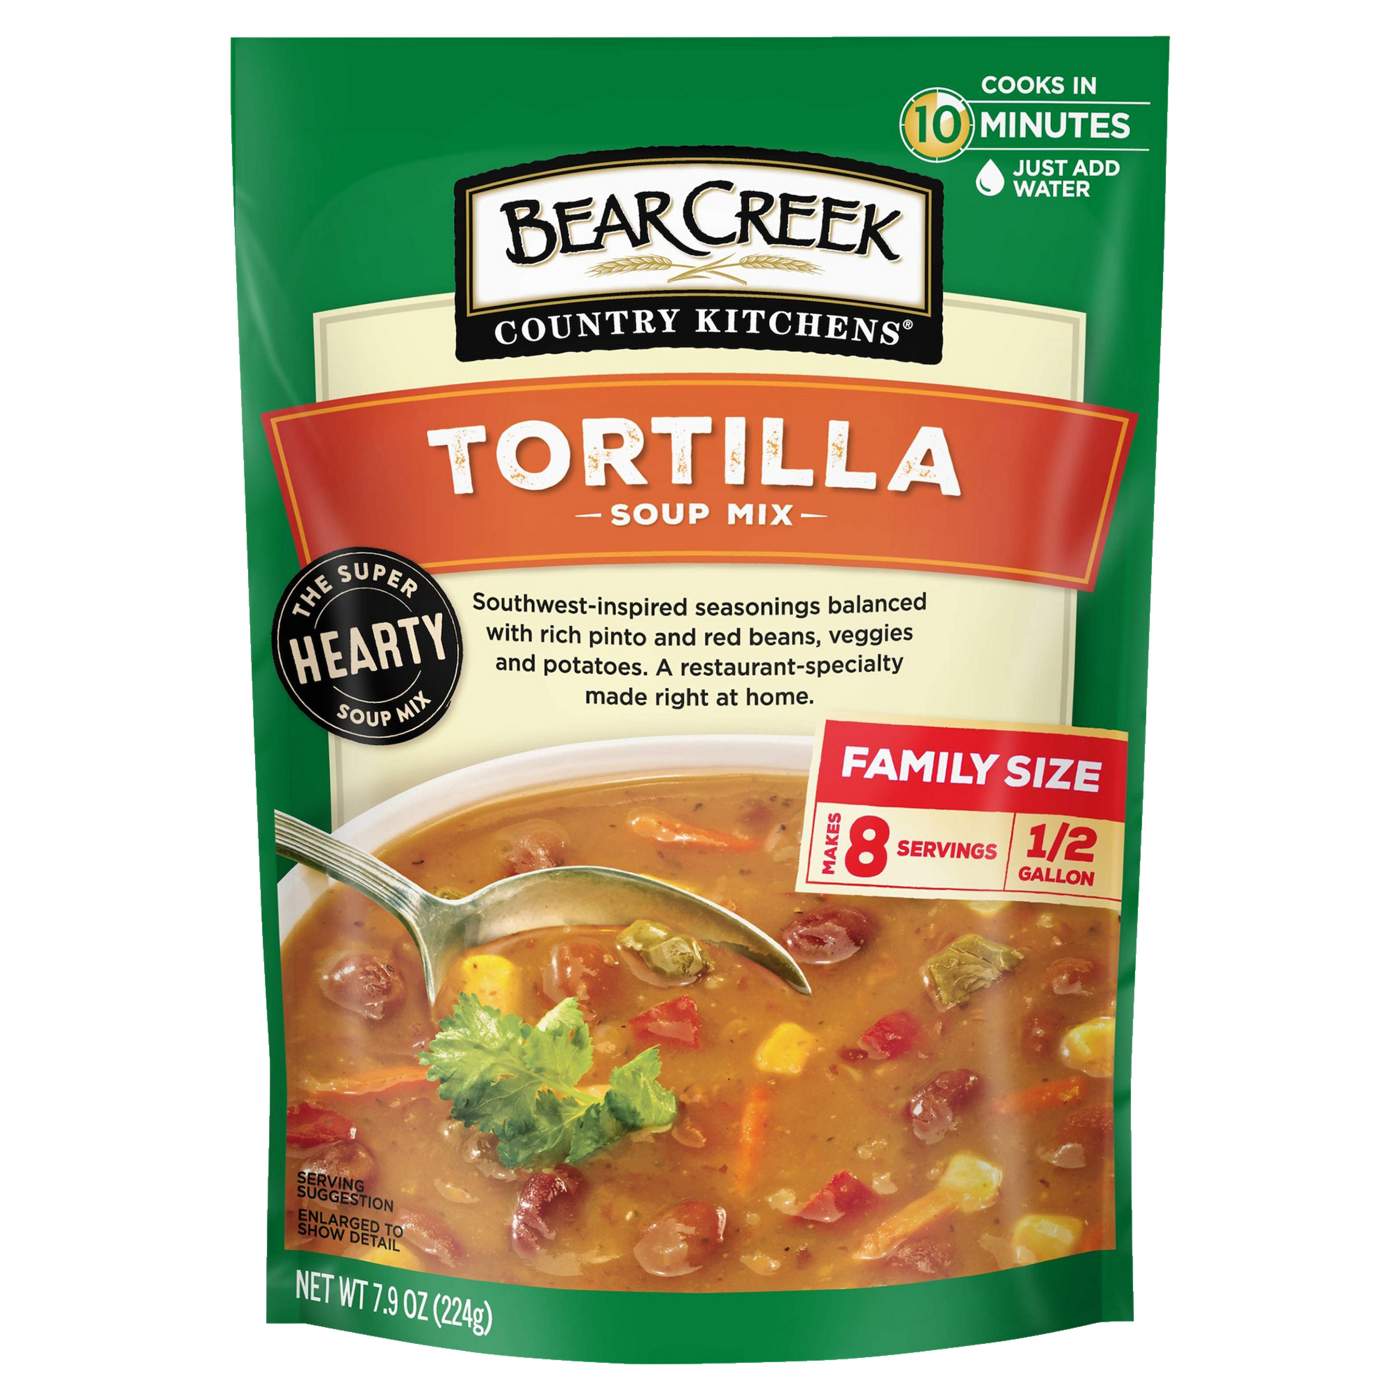 Bear Creek Tortilla Soup Mix; image 1 of 3